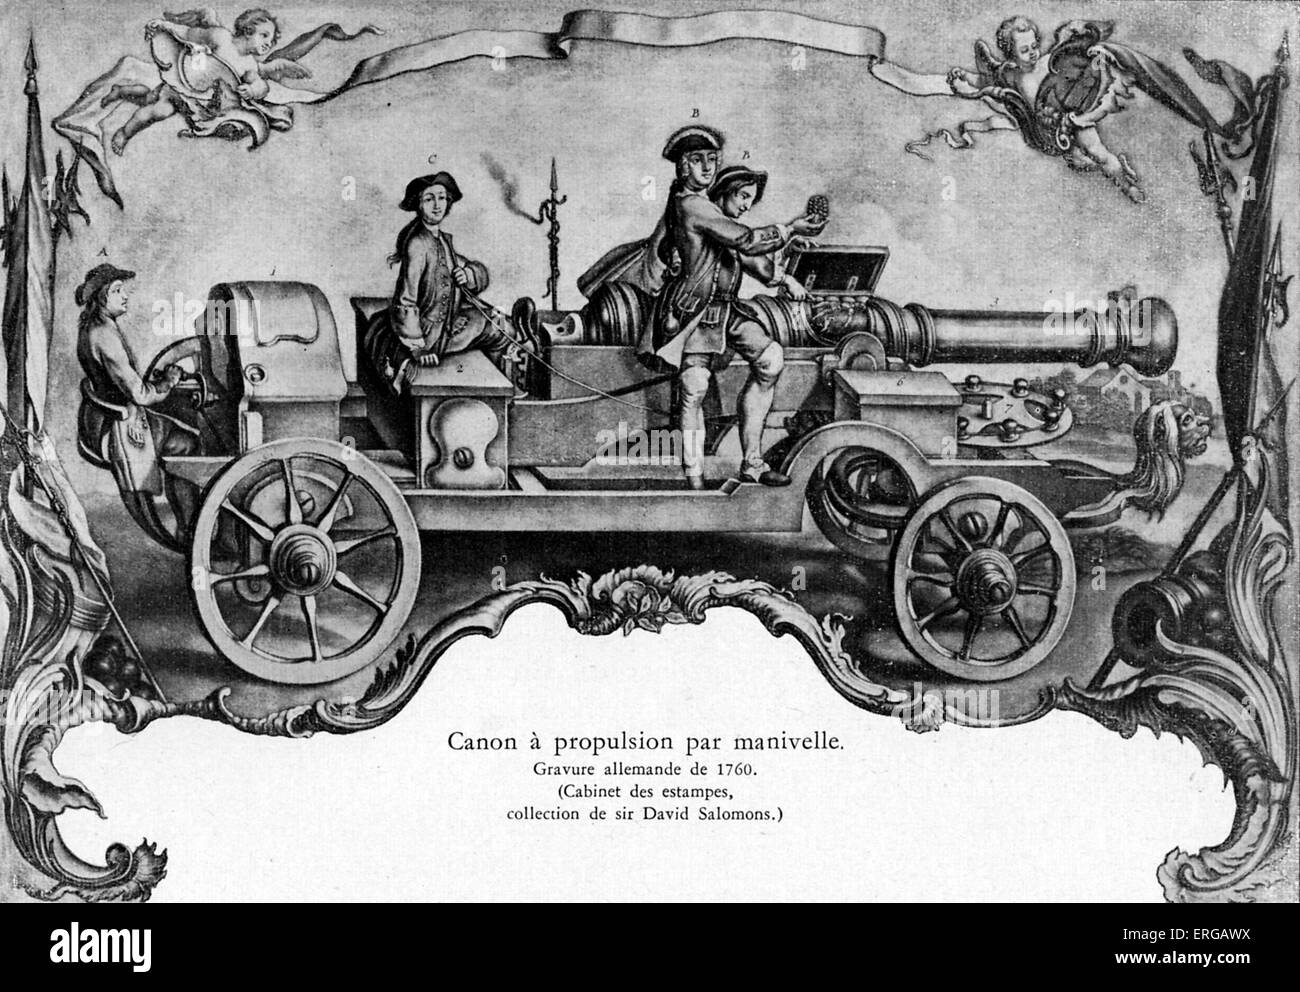 Mobile canon powered by crank handle. (Precursor of a tank.) German engraving, 1760. Stock Photo